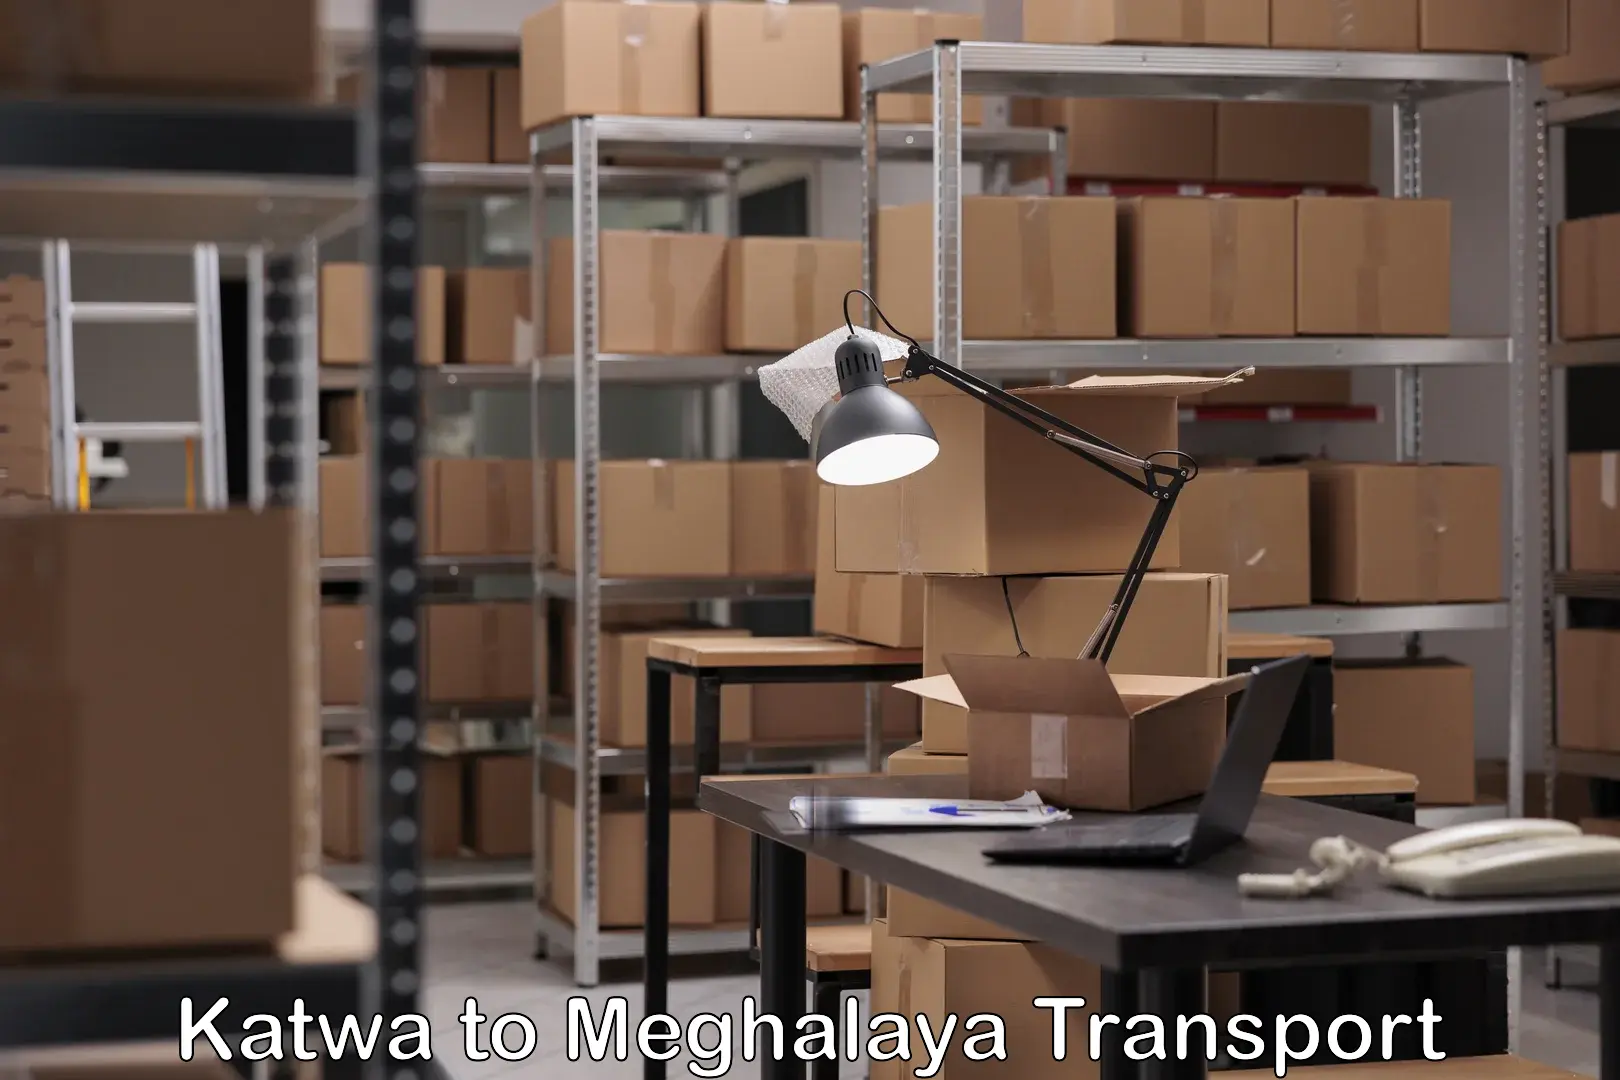 Truck transport companies in India Katwa to Meghalaya